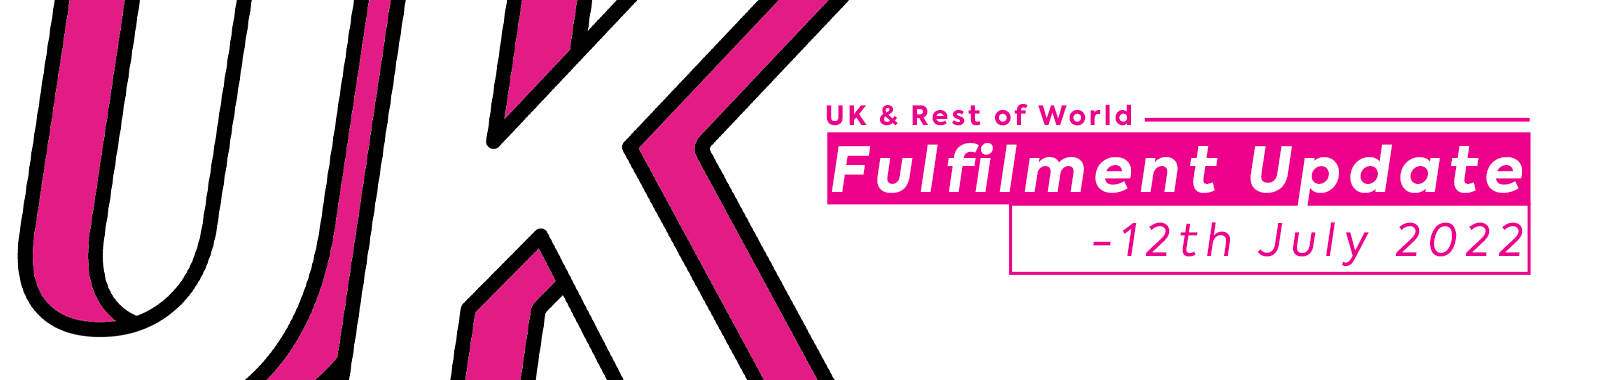 UK & ROW Fulfilment Update - 12th July